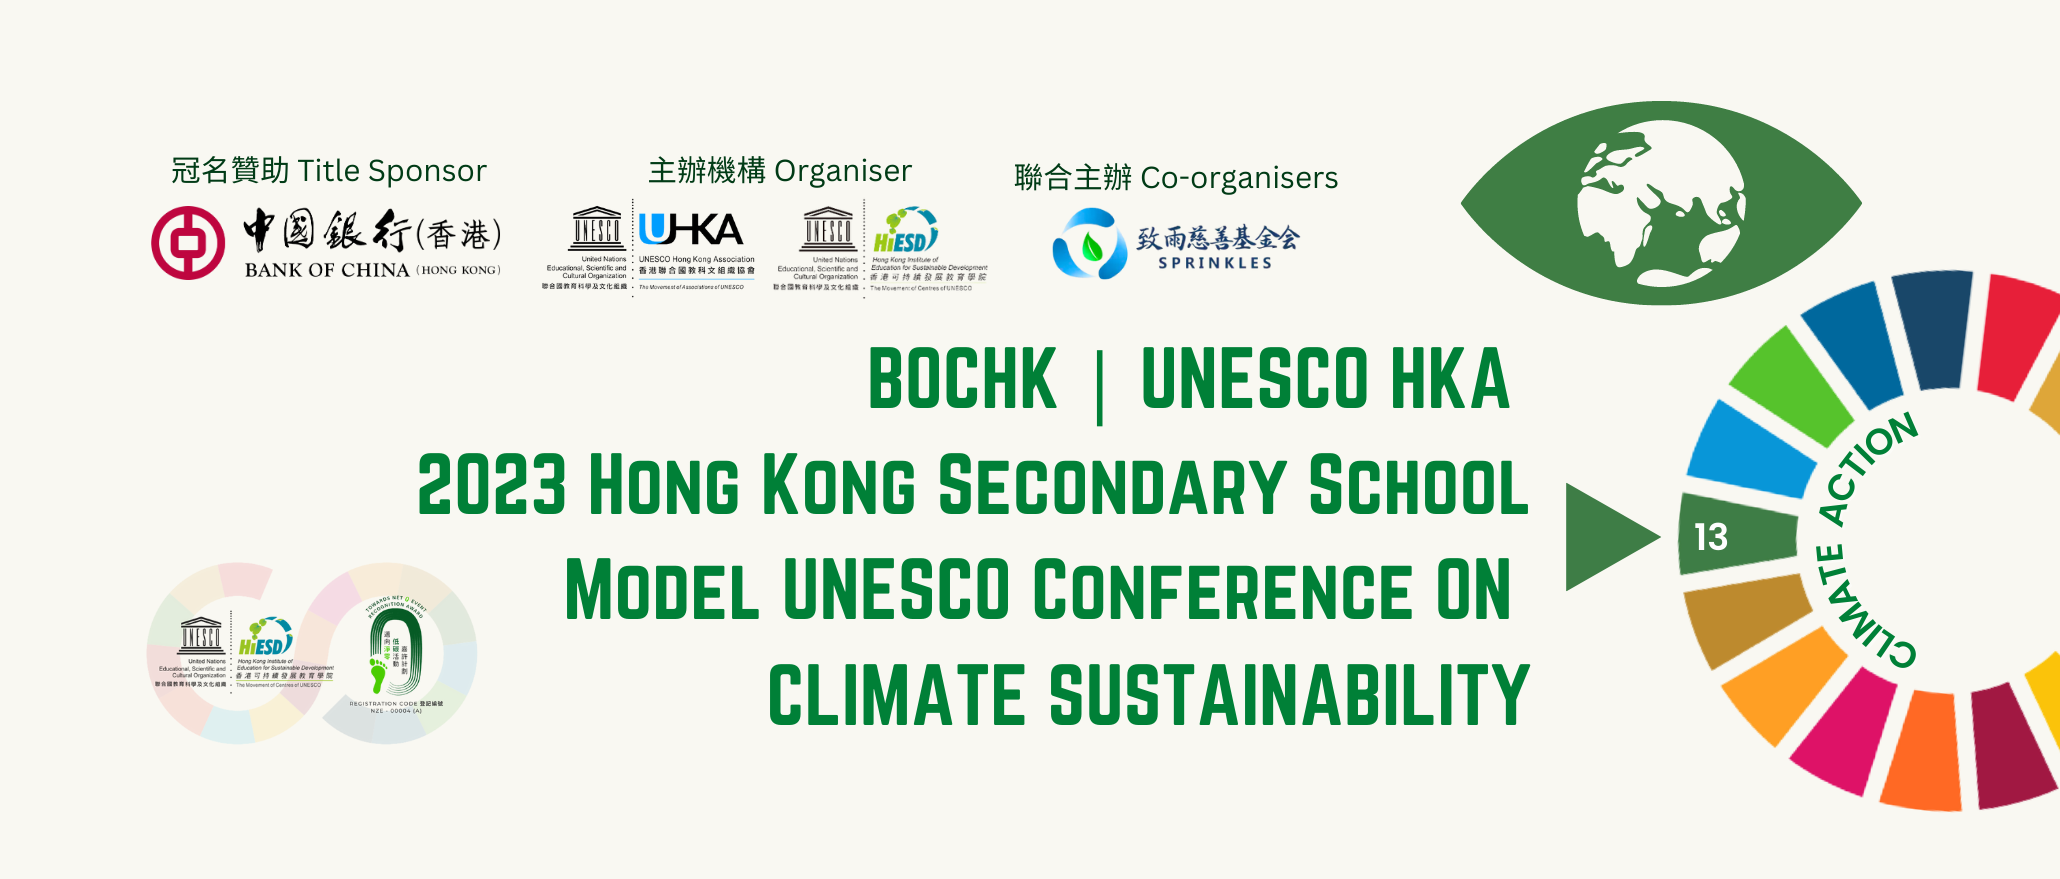 MUNESCO Conference 2023 - Climate Sustainability